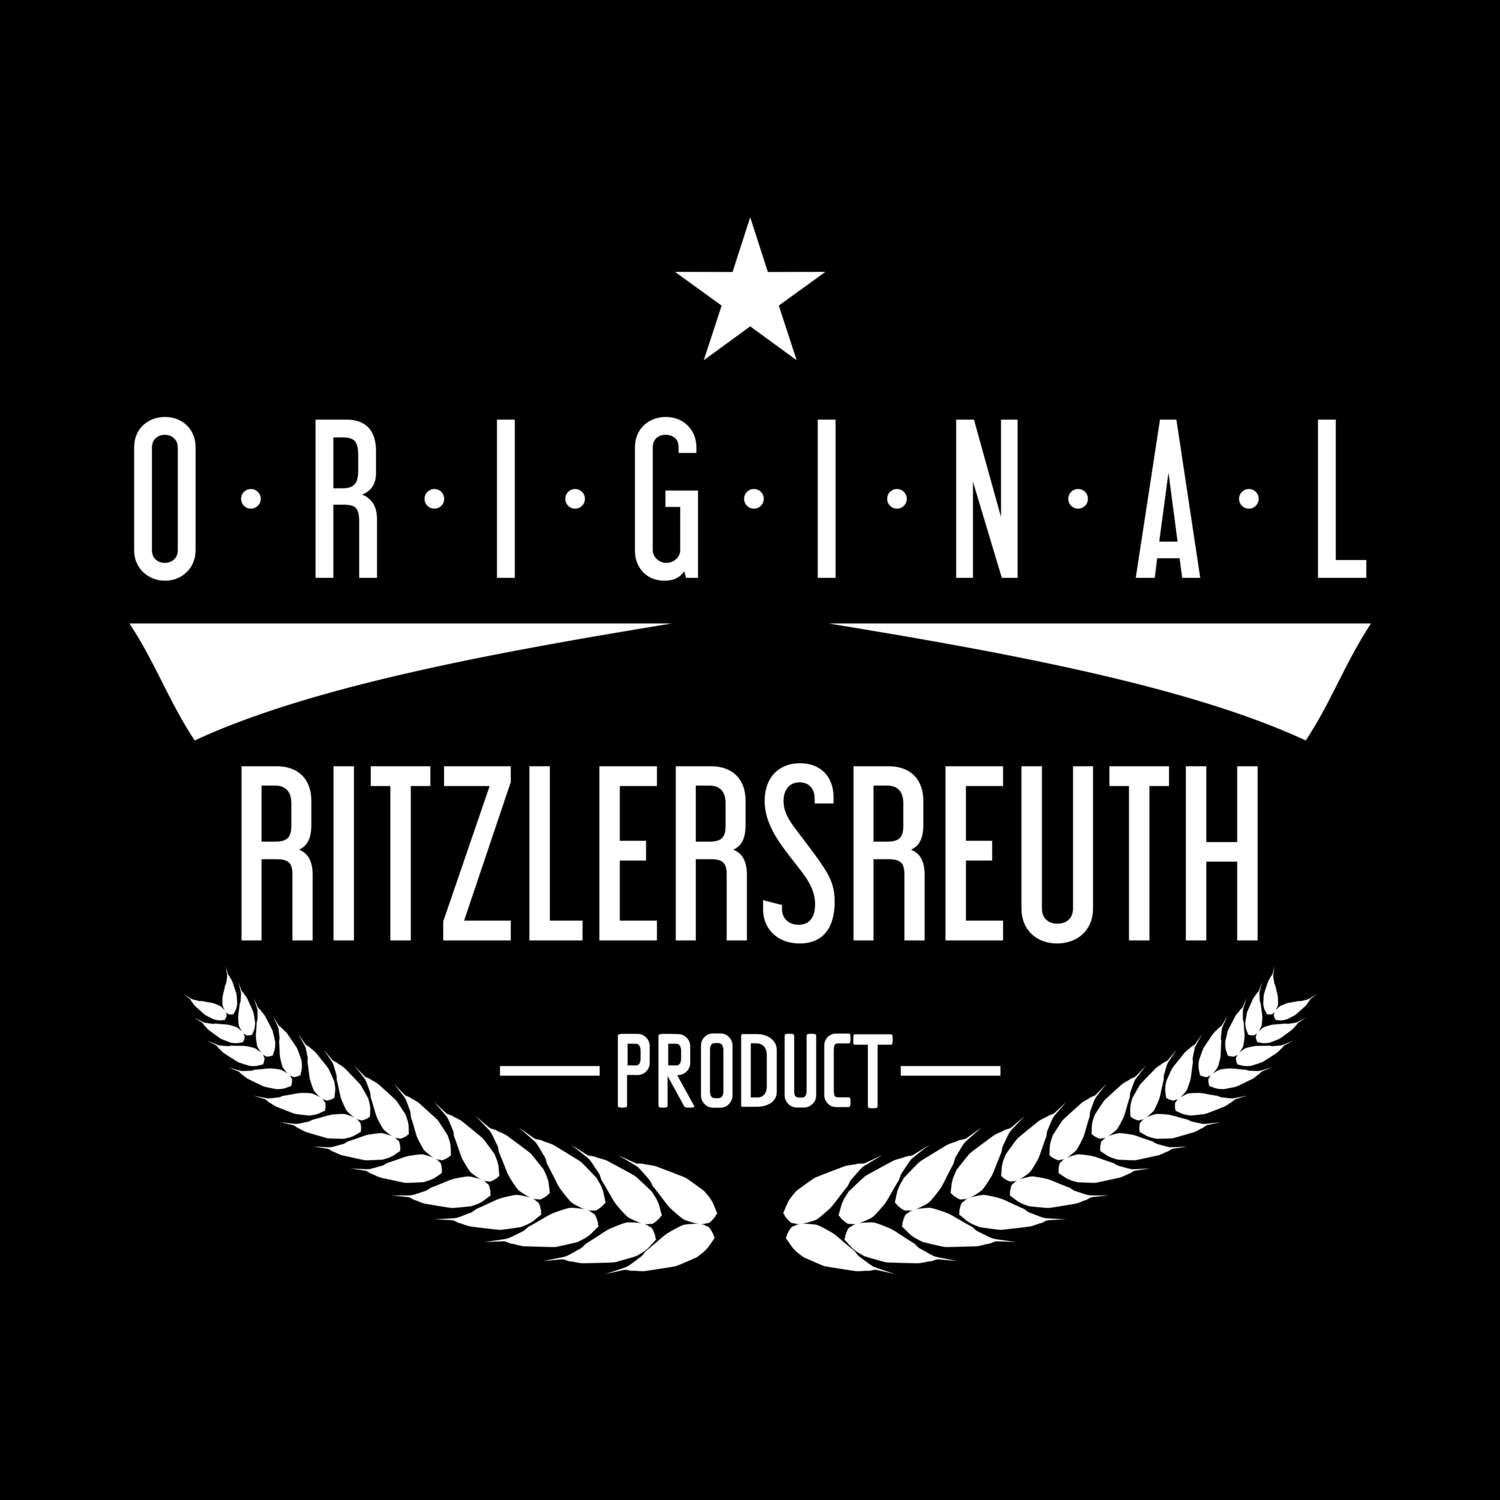 Ritzlersreuth T-Shirt »Original Product«